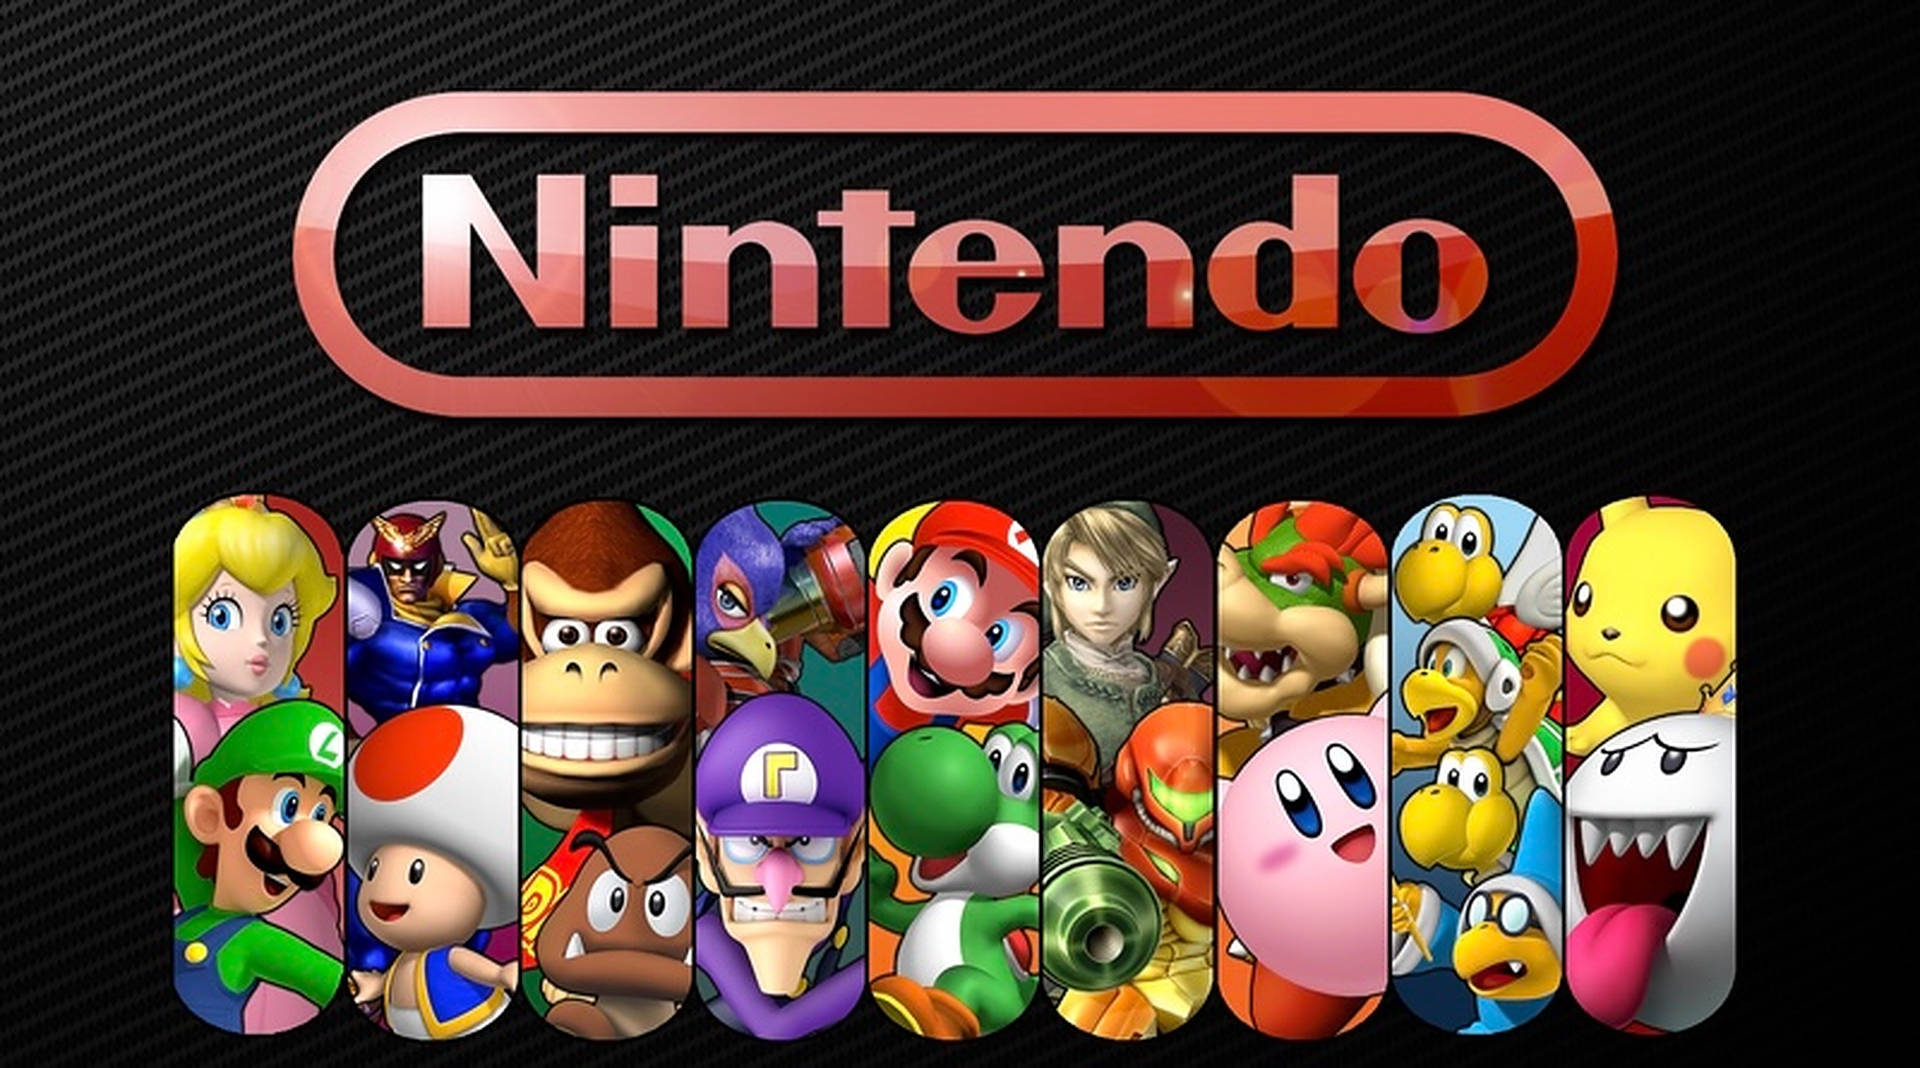 Nintendo Characters Pictures Wallpaper